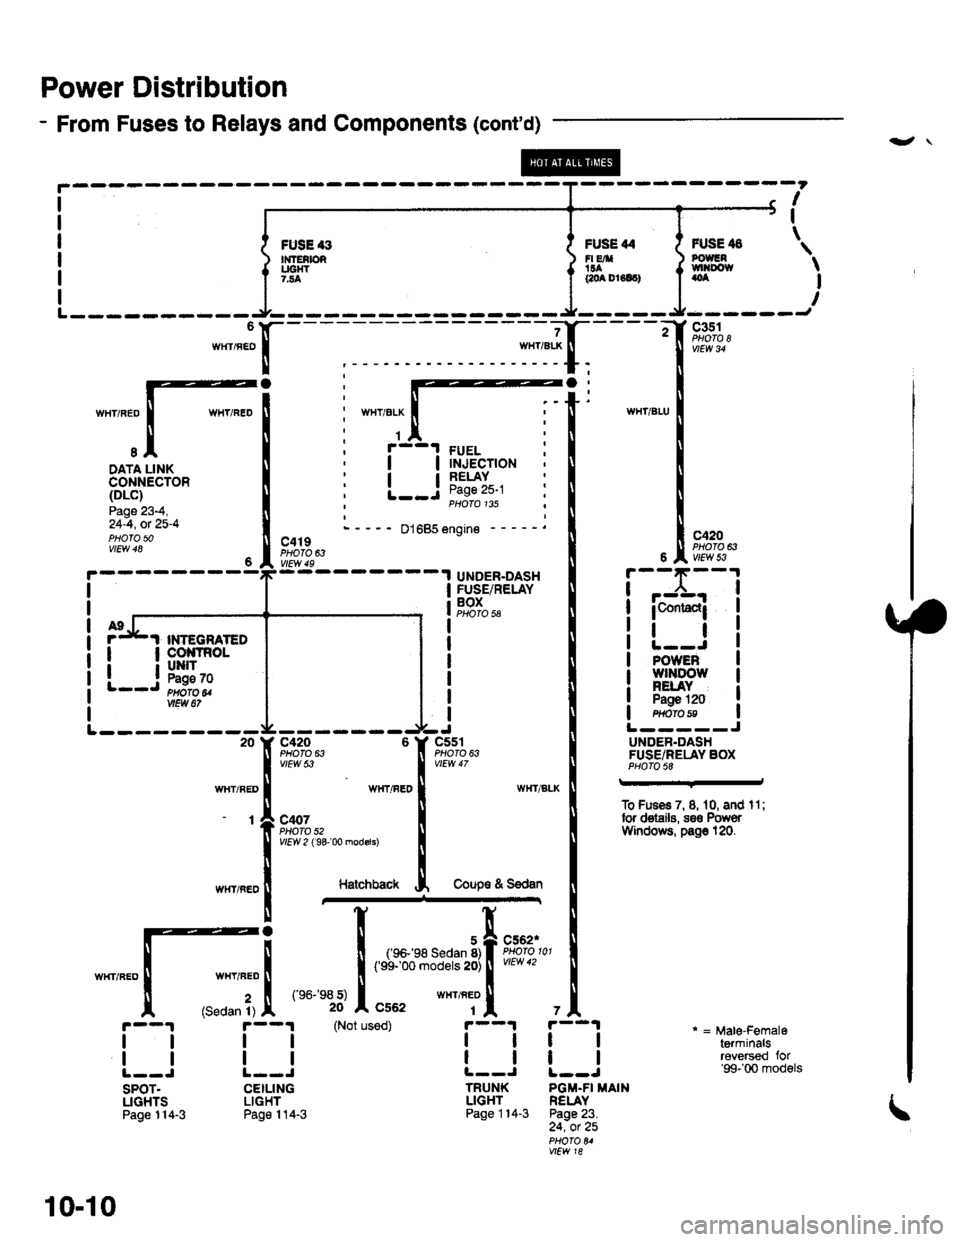 HONDA CIVIC 1998 6.G Workshop Manual Power Distribution
- From Fuses to Relays and Components (contd)
-",JX-
I
I
\FUSE 3n{fEtbRUC|{T7..4
FUSE 44FI EA!aacoa Dr6lc)
FUSE il8POUGNtvtl|Do{taoa
c351
c420PHOTO 63
I-.:CrJ
WIIT/ELX
1
I
I
I
I